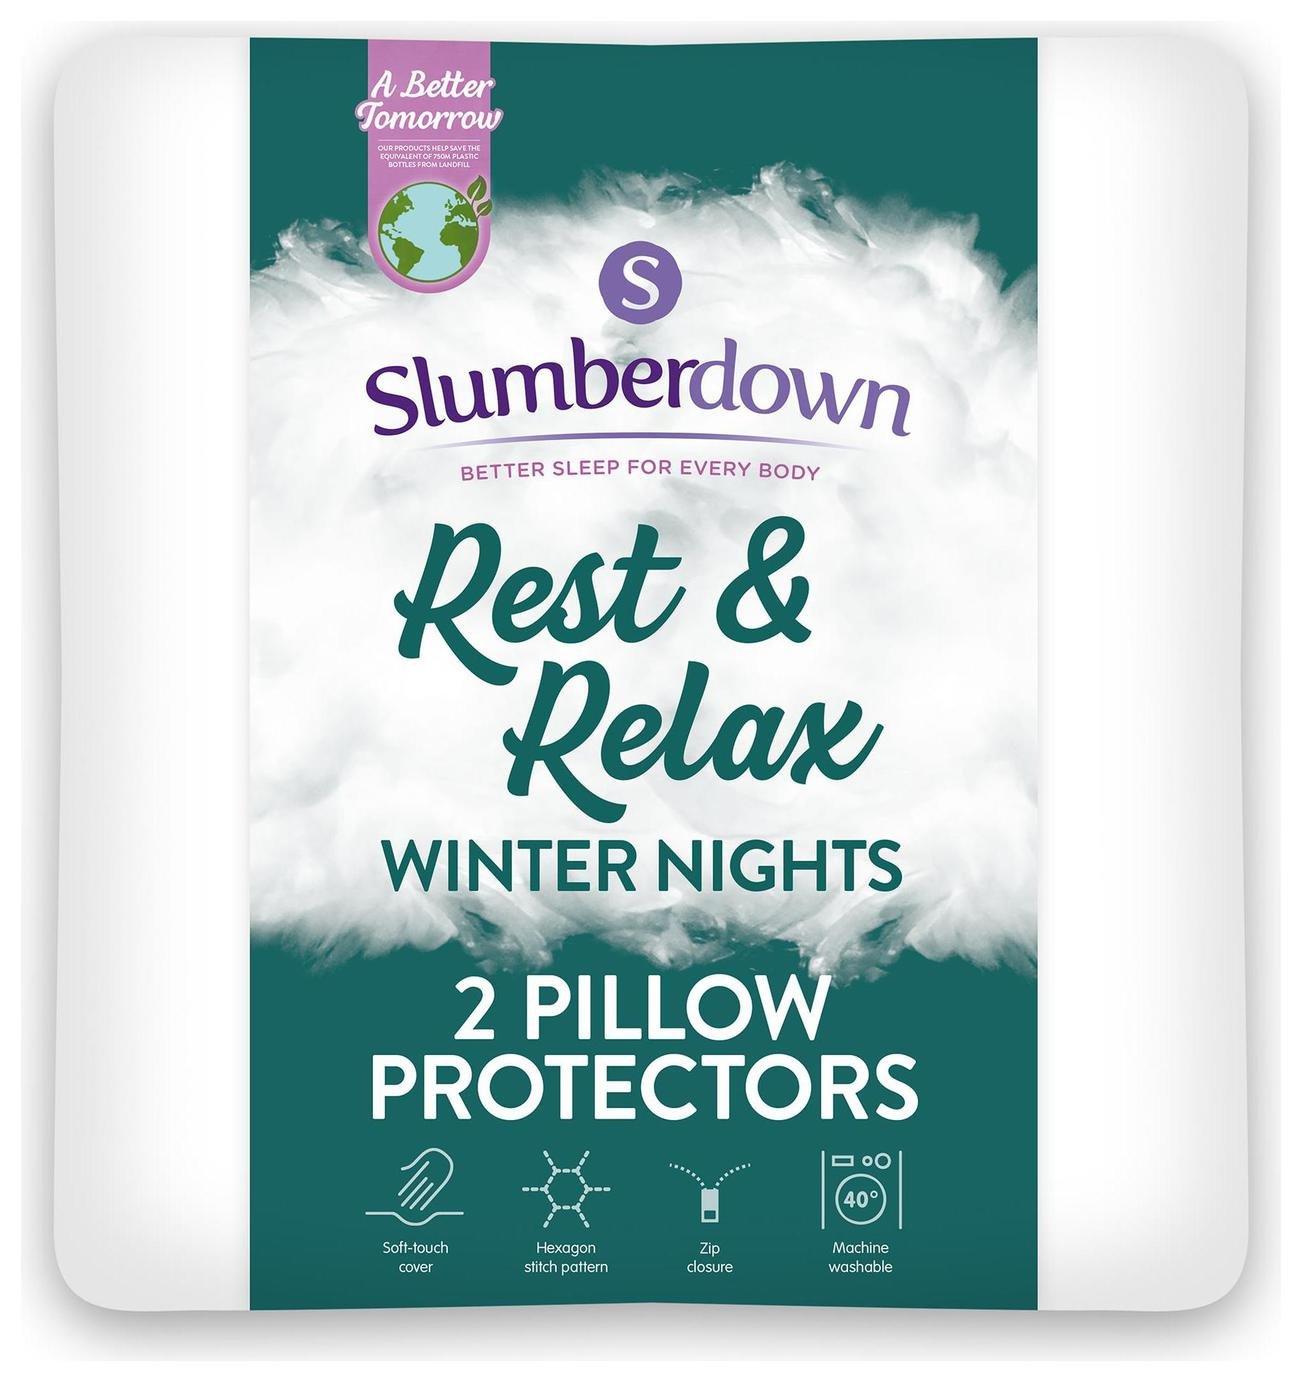 Slumberdown Rest & Relax Pillow Protectors - 2 Pack